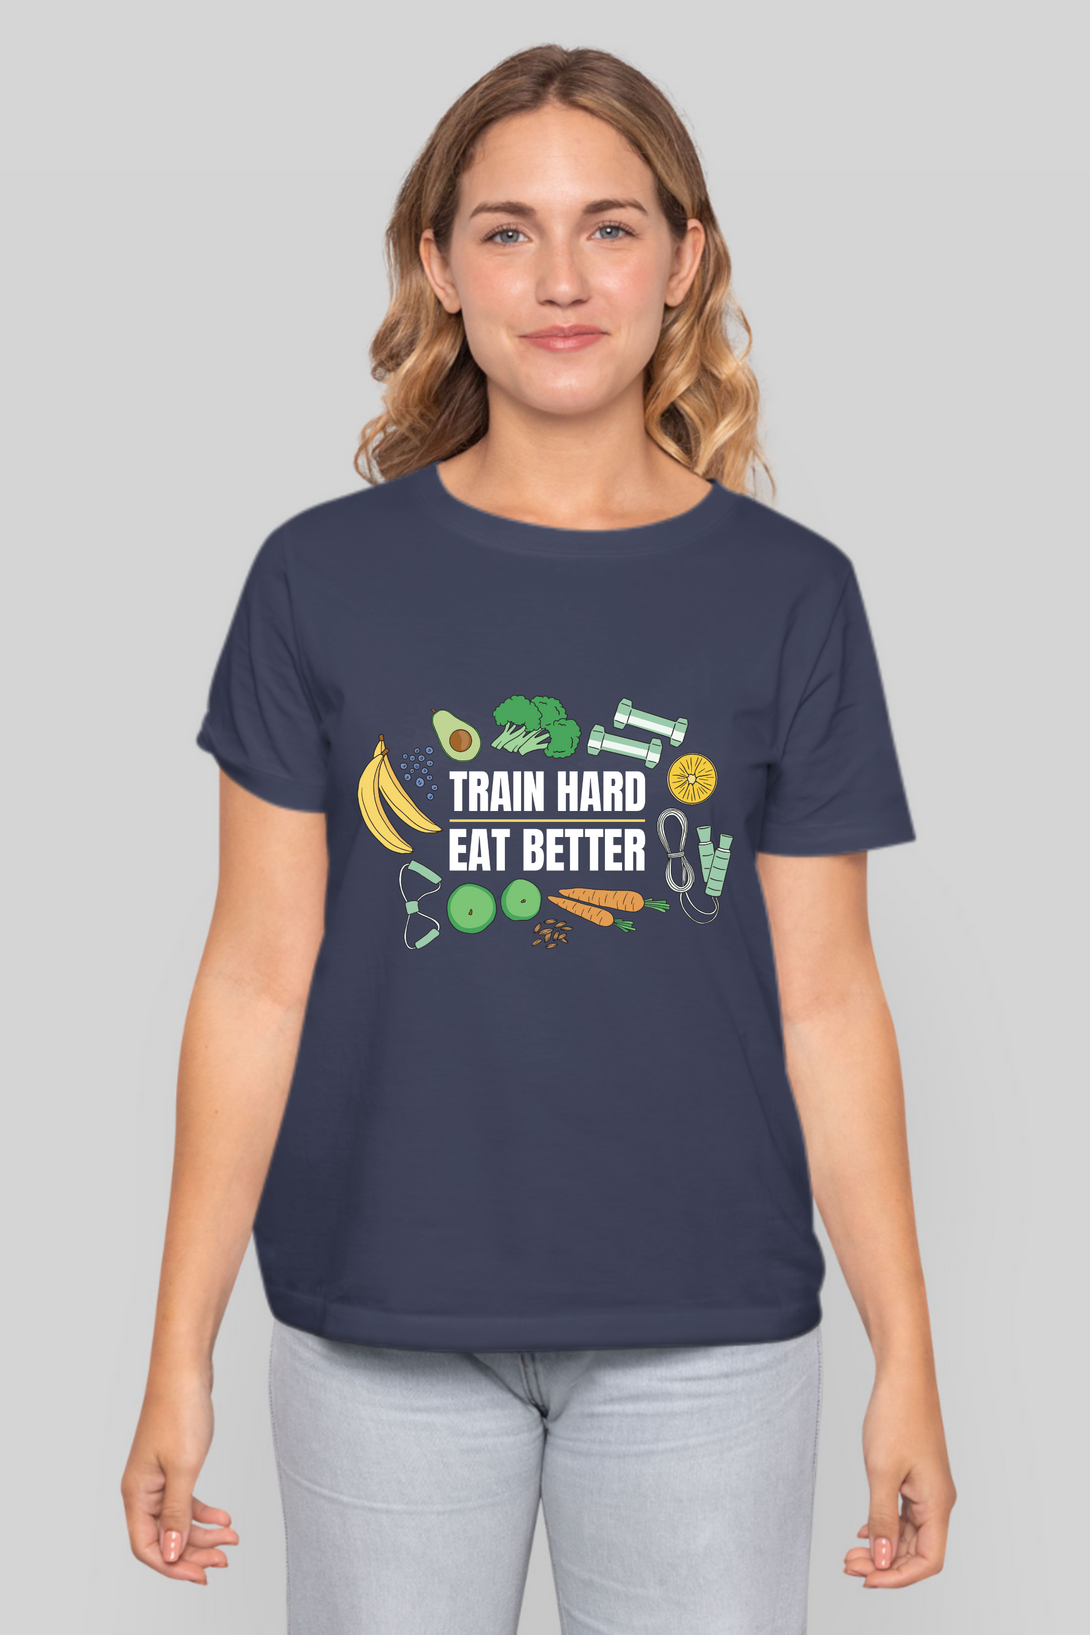 Train Hard, Eat Better Printed T-Shirt For Women - WowWaves - 9